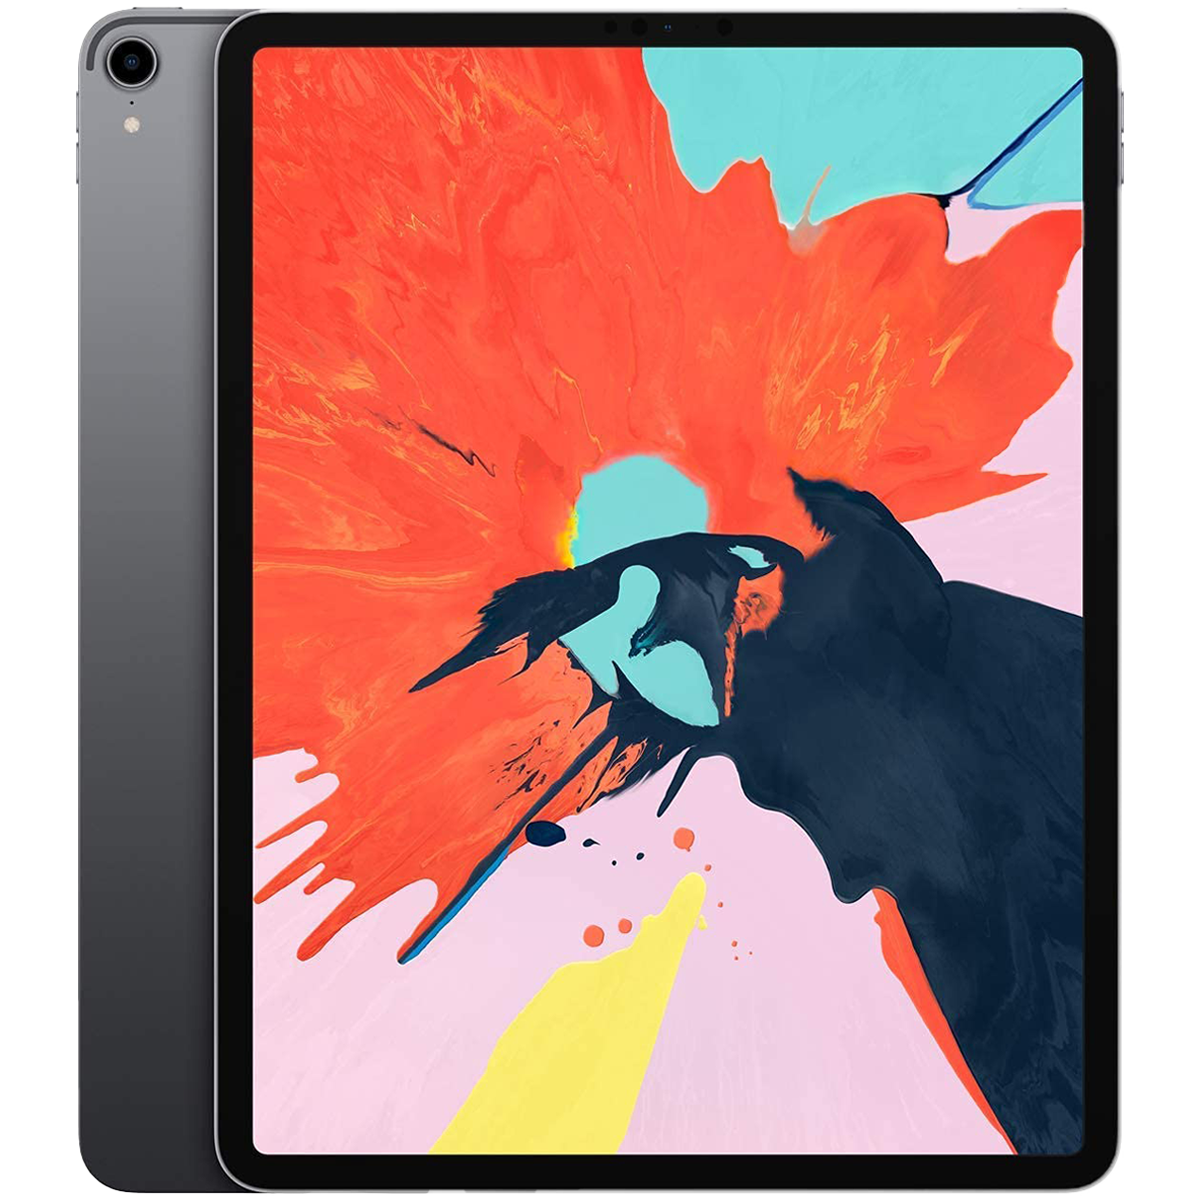 iPad Pro 12.9" 3rd Gen (2018)